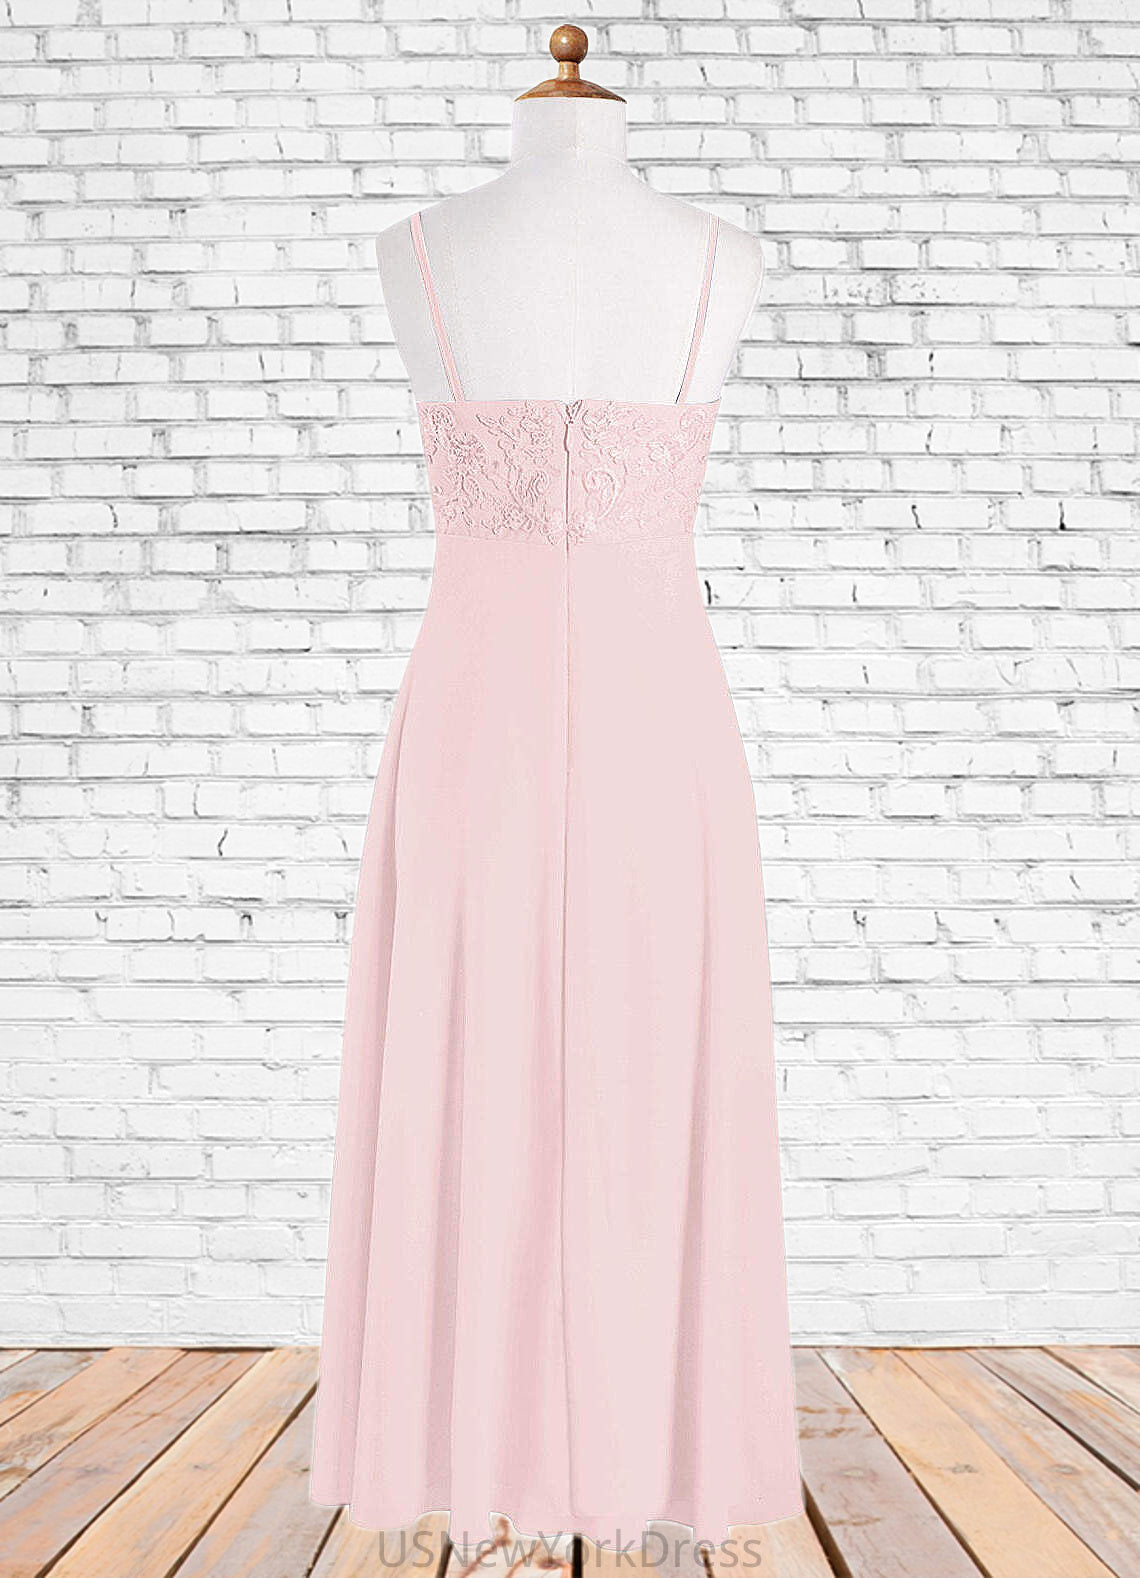 Adelaide A-Line Lace Chiffon Floor-Length Junior Bridesmaid Dress Blushing Pink DJP0022853